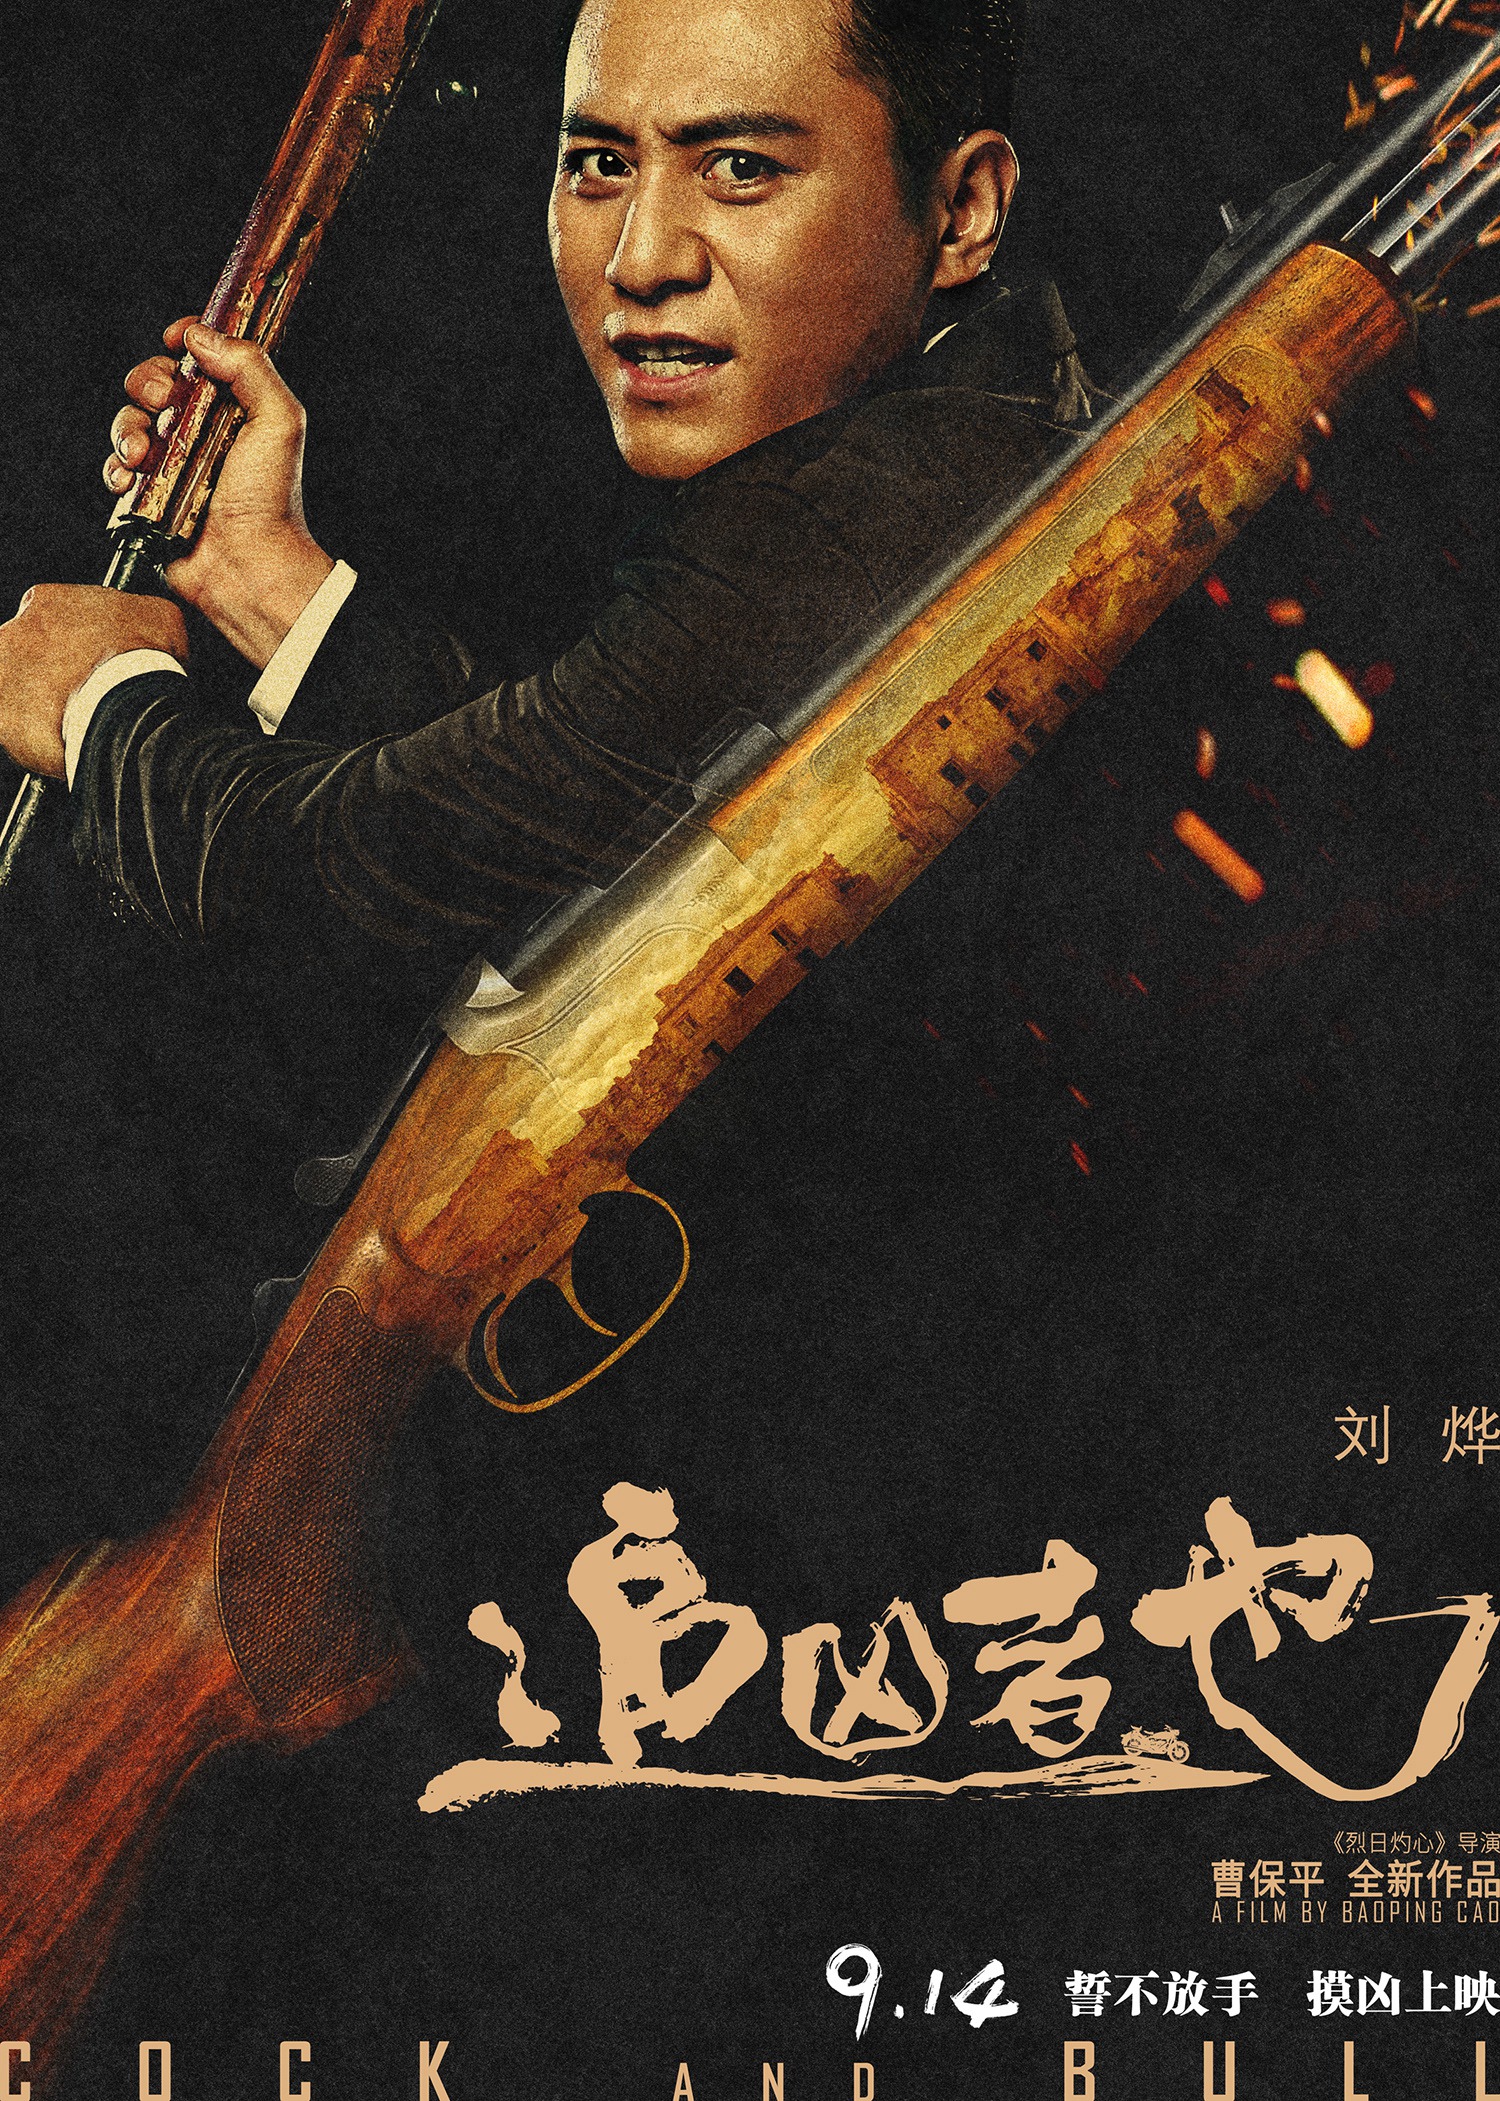 Mega Sized Movie Poster Image for Zhui xiong zhe ye (#9 of 16)